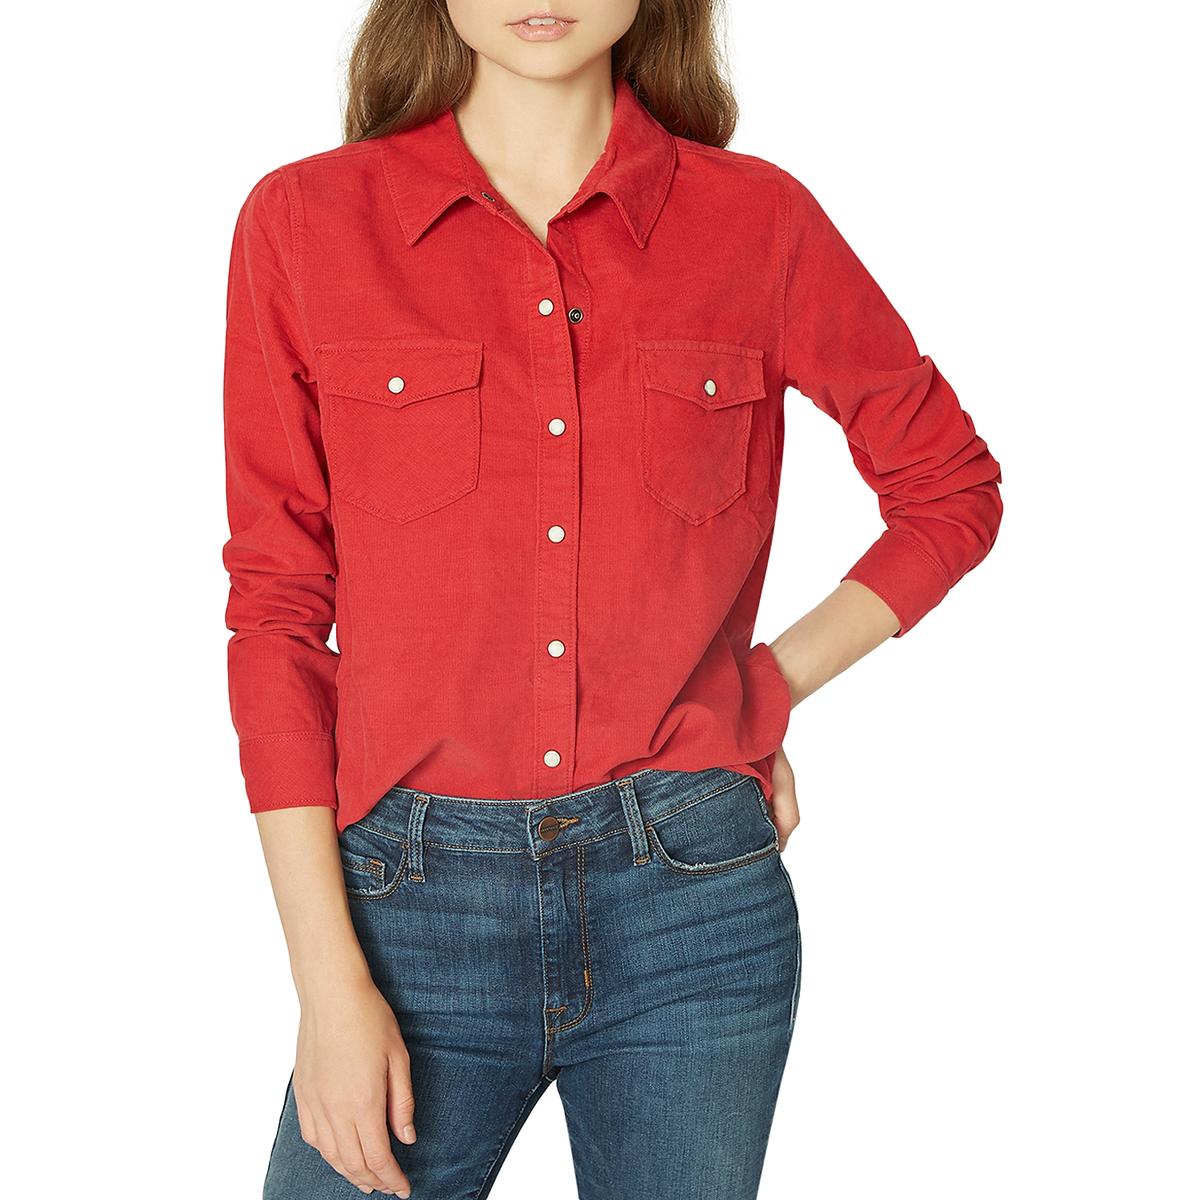 Sanctuary Womens Red Corduroy Work Casual Button-Down Top Shirt XS BHFO ...